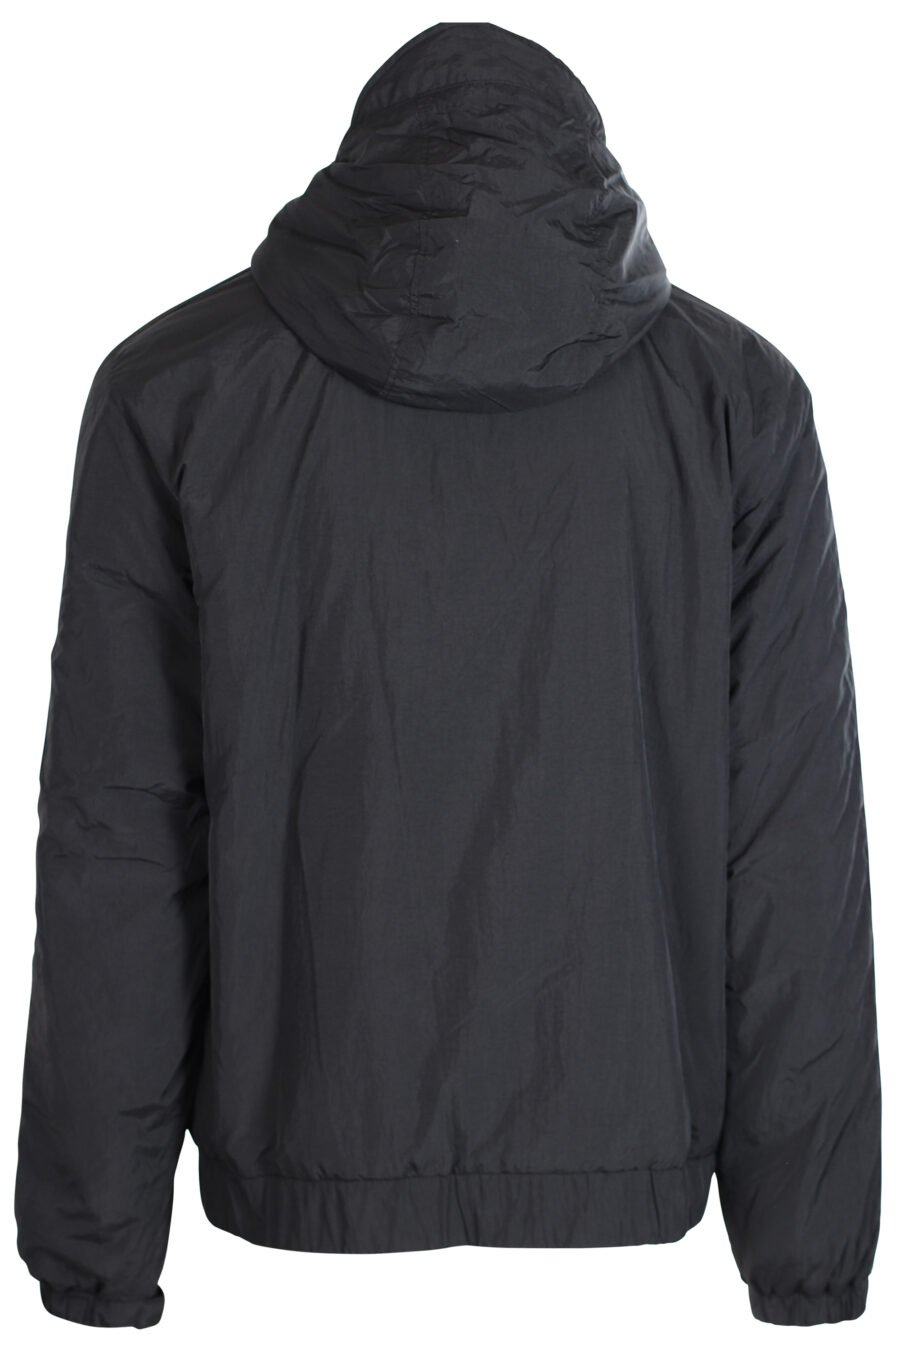 Black hooded jacket with logo tape sleeves - 8058987960710 3